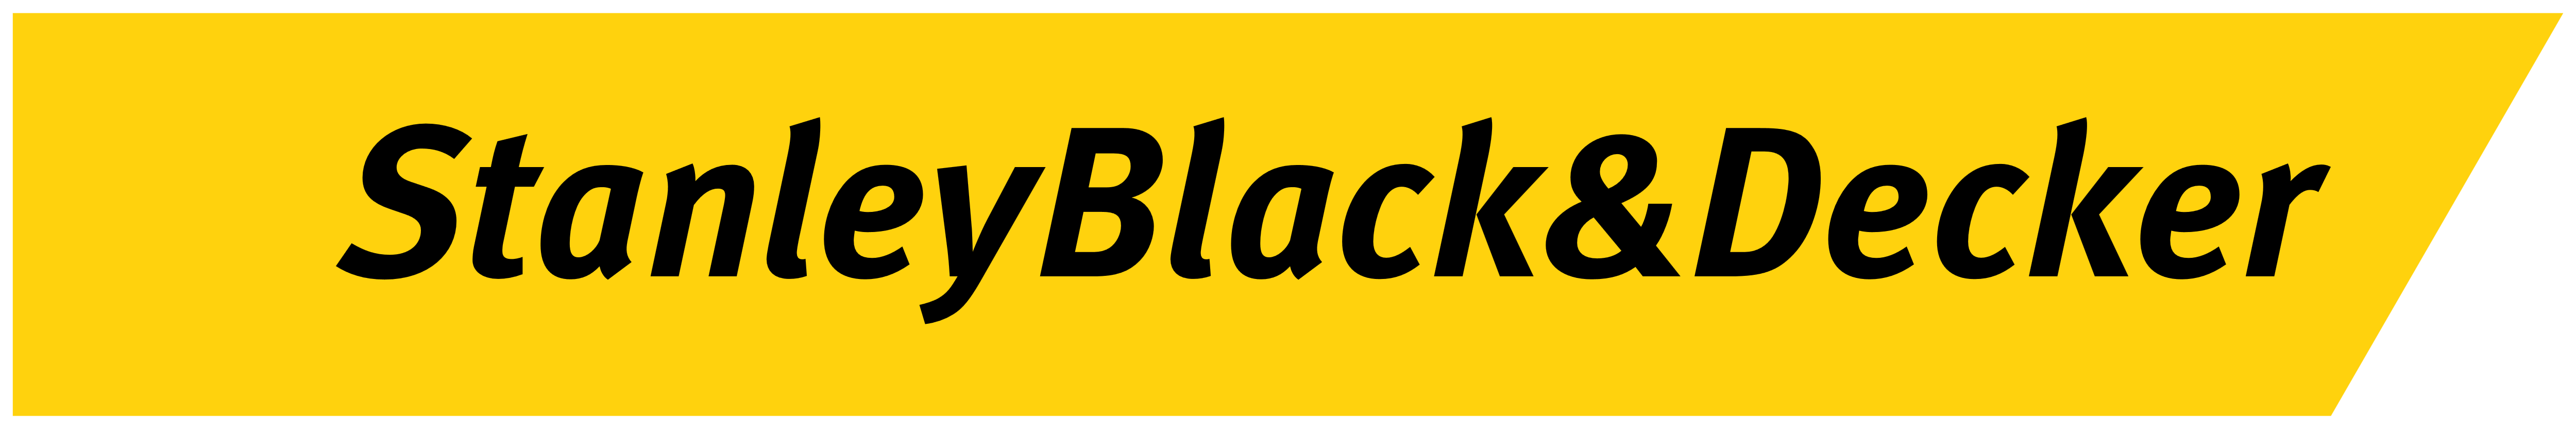 Stanley Black Decker Logos Download